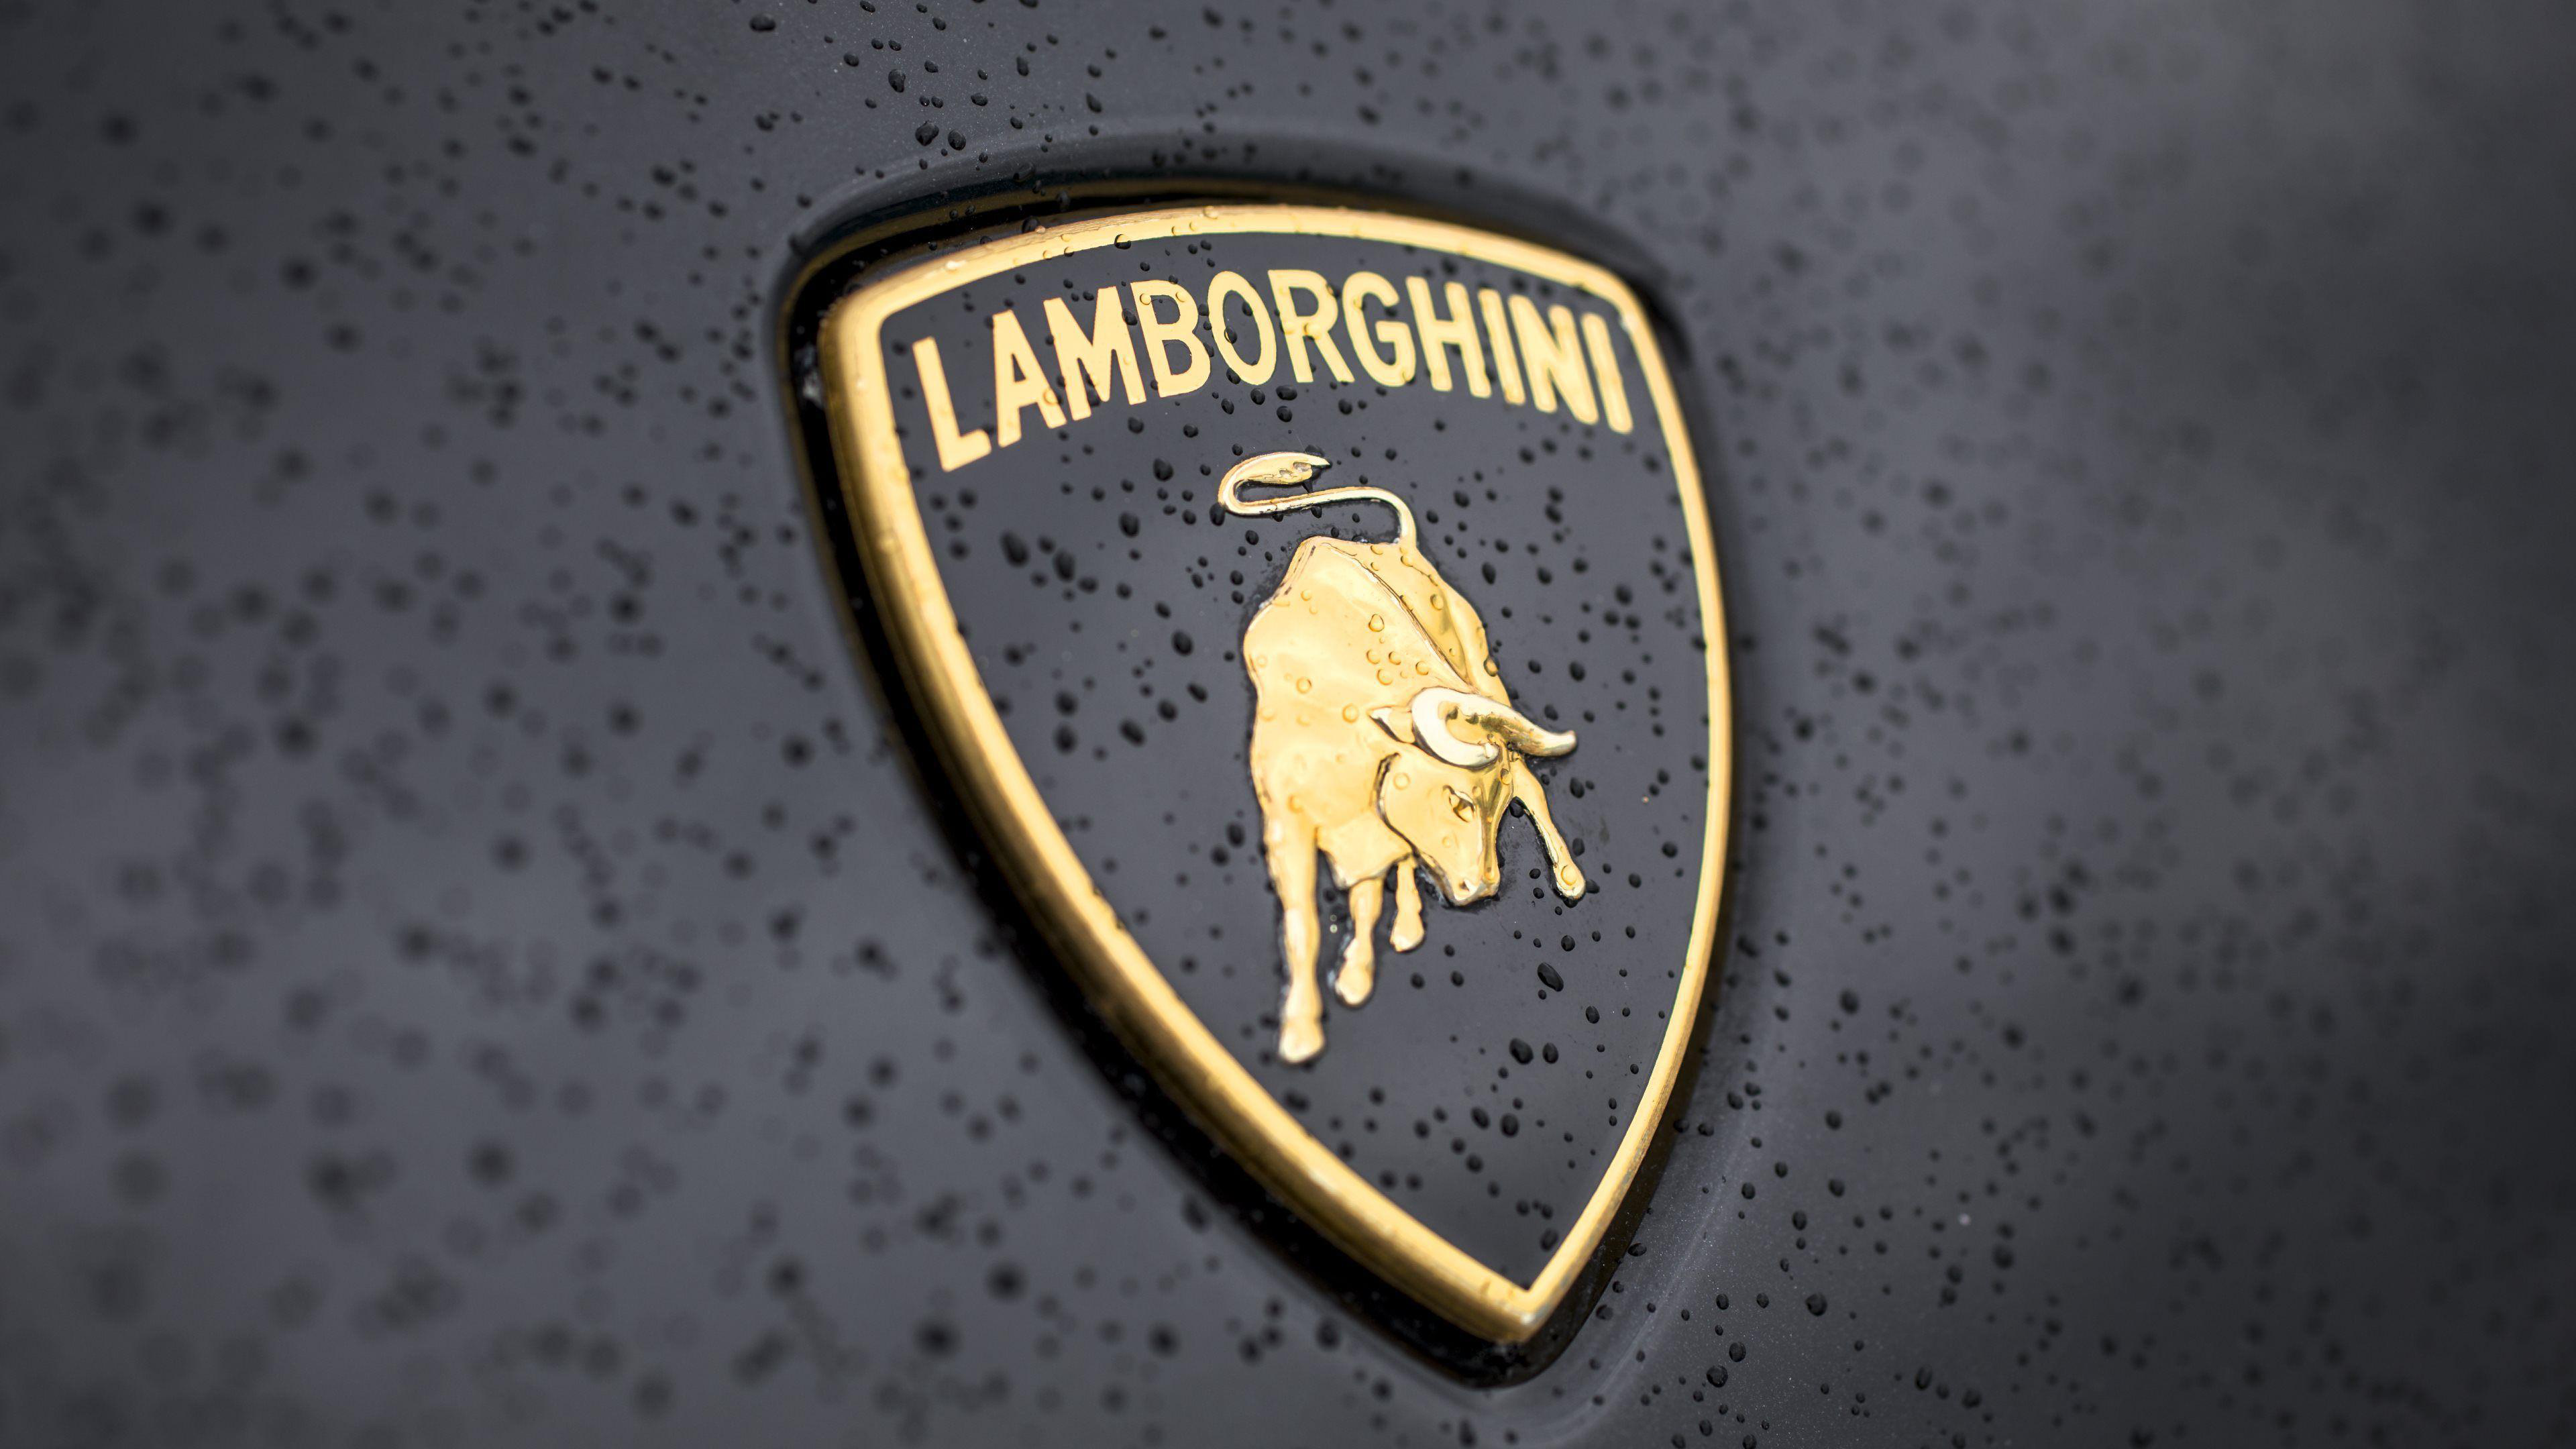 Lamborghini logo in rain drops close-up Desktop wallpapers 640x960